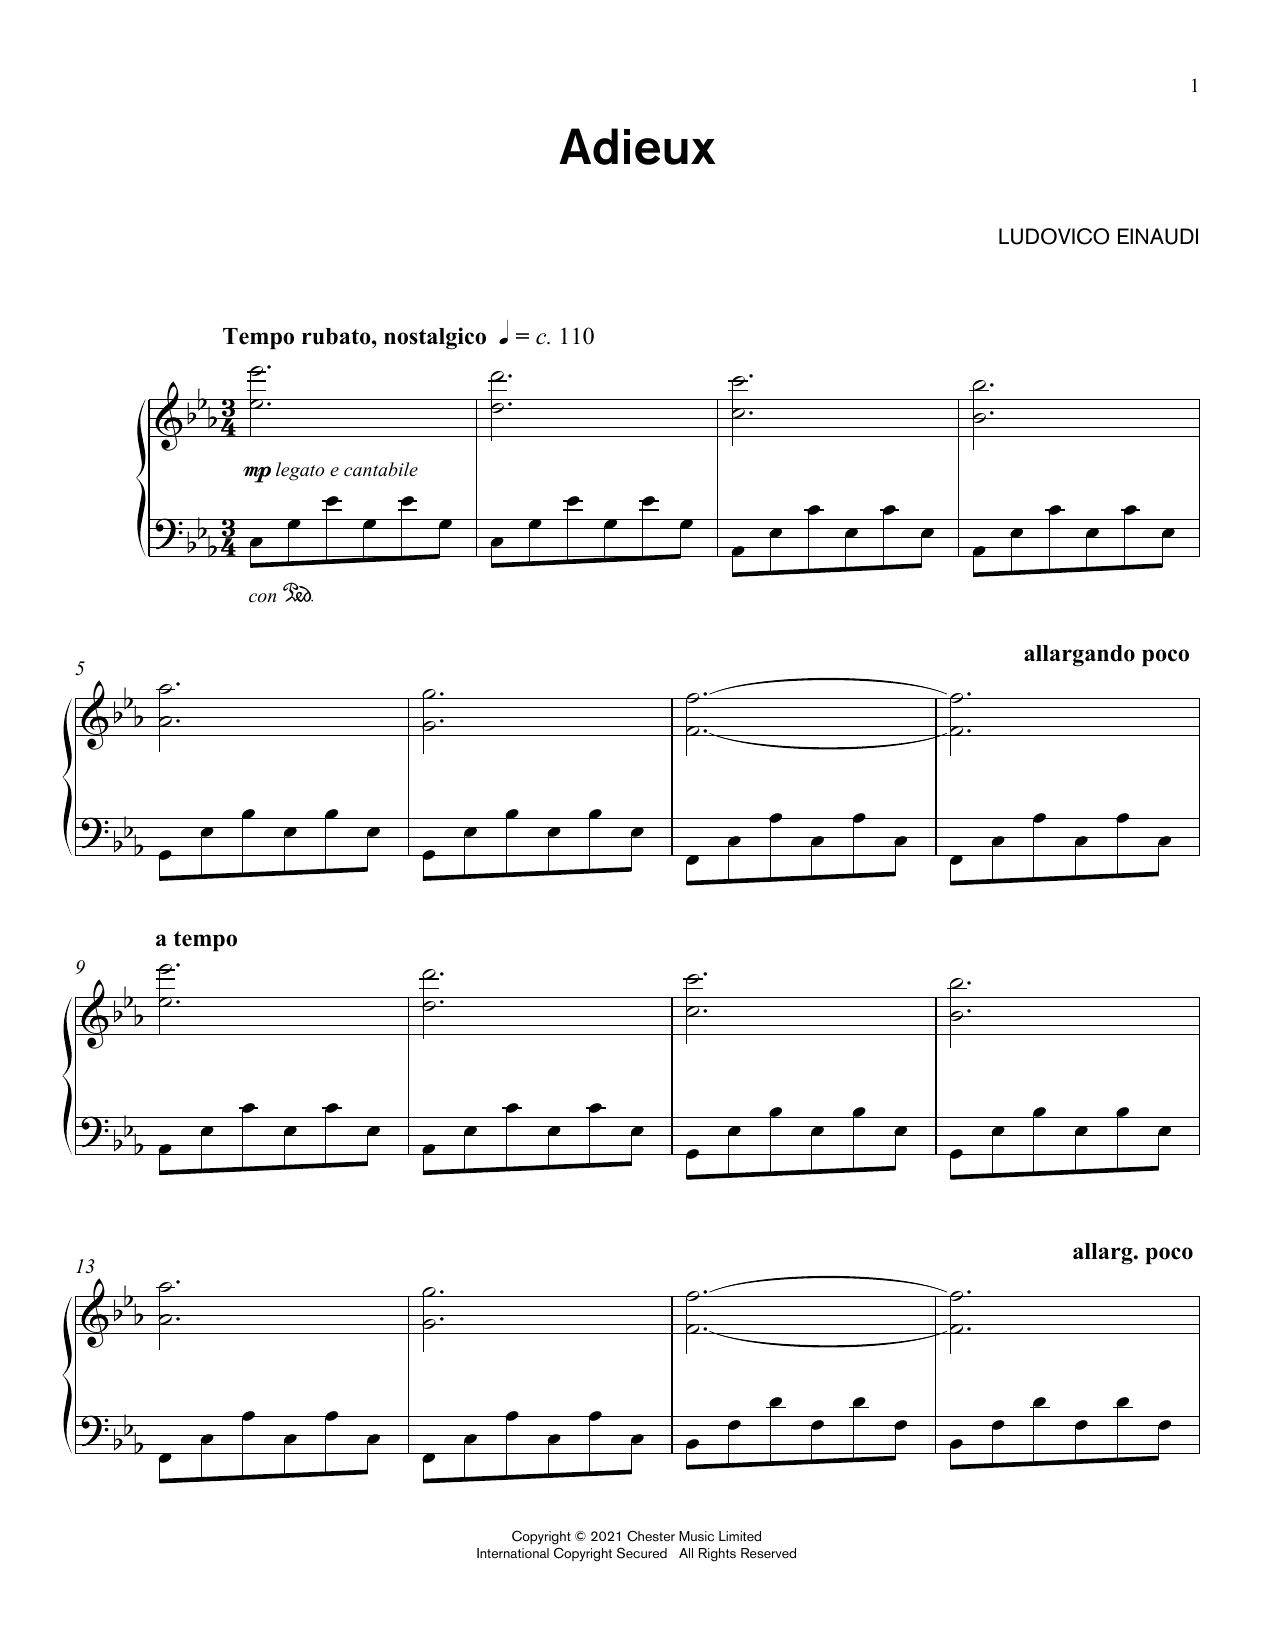 Download Ludovico Einaudi Adieux Sheet Music